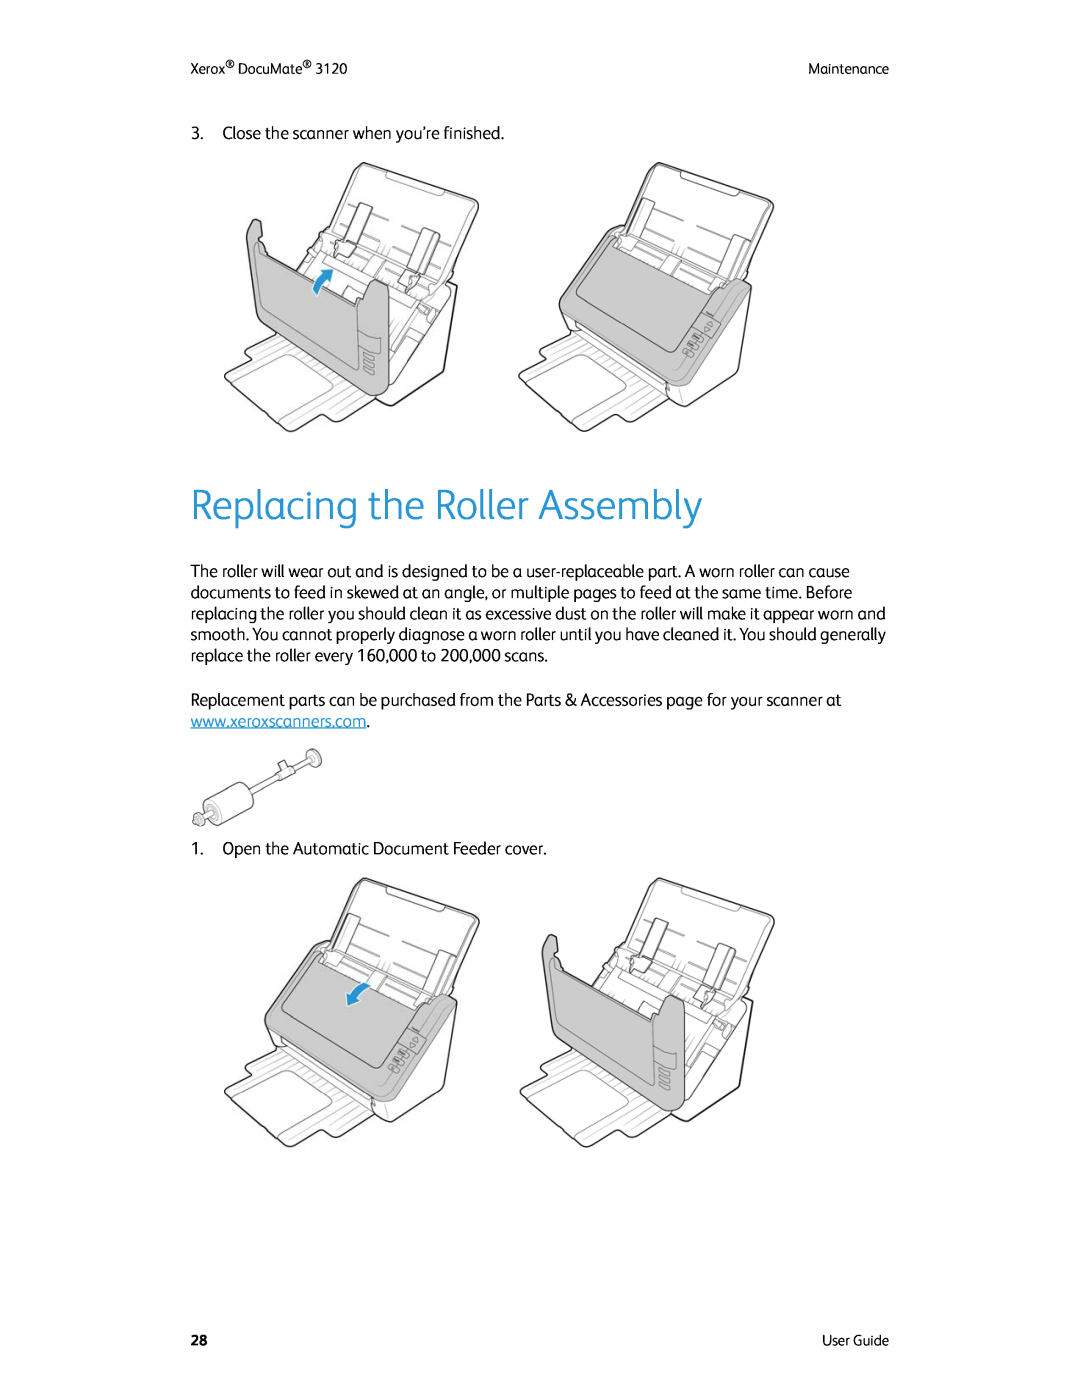 Xerox xerox manual Replacing the Roller Assembly 